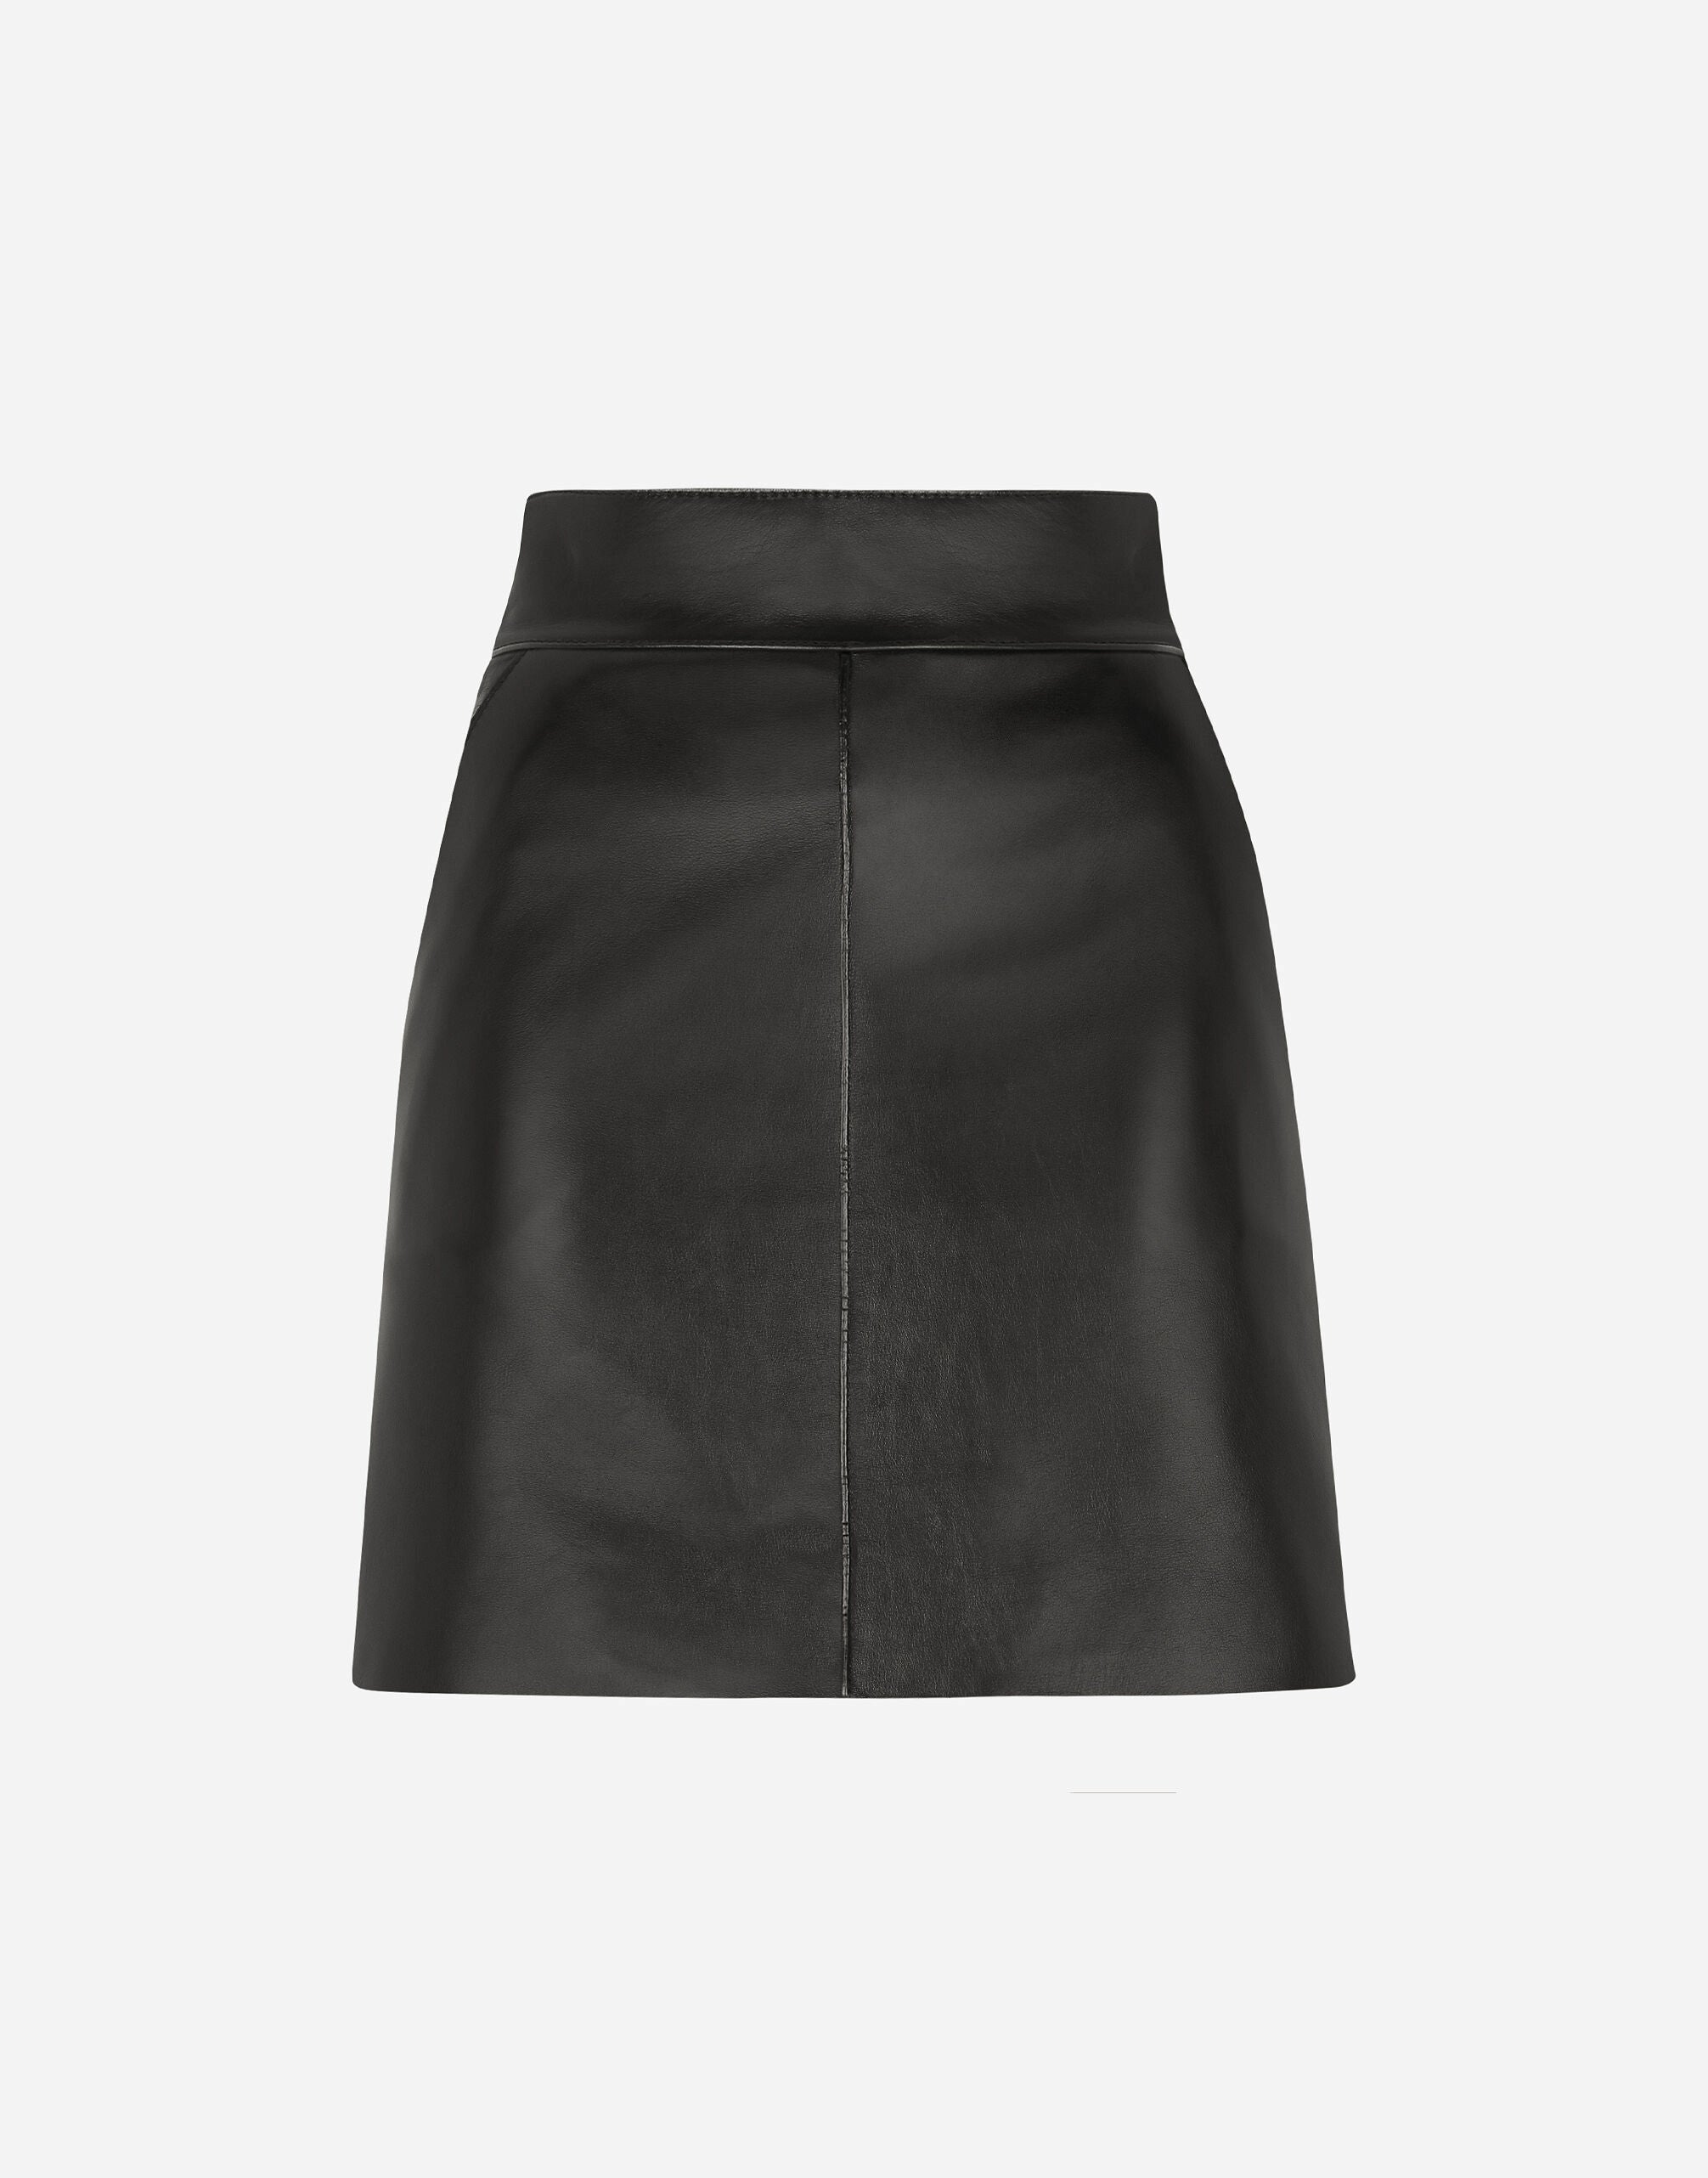 Dolce & Gabbana Short Leather Skirt